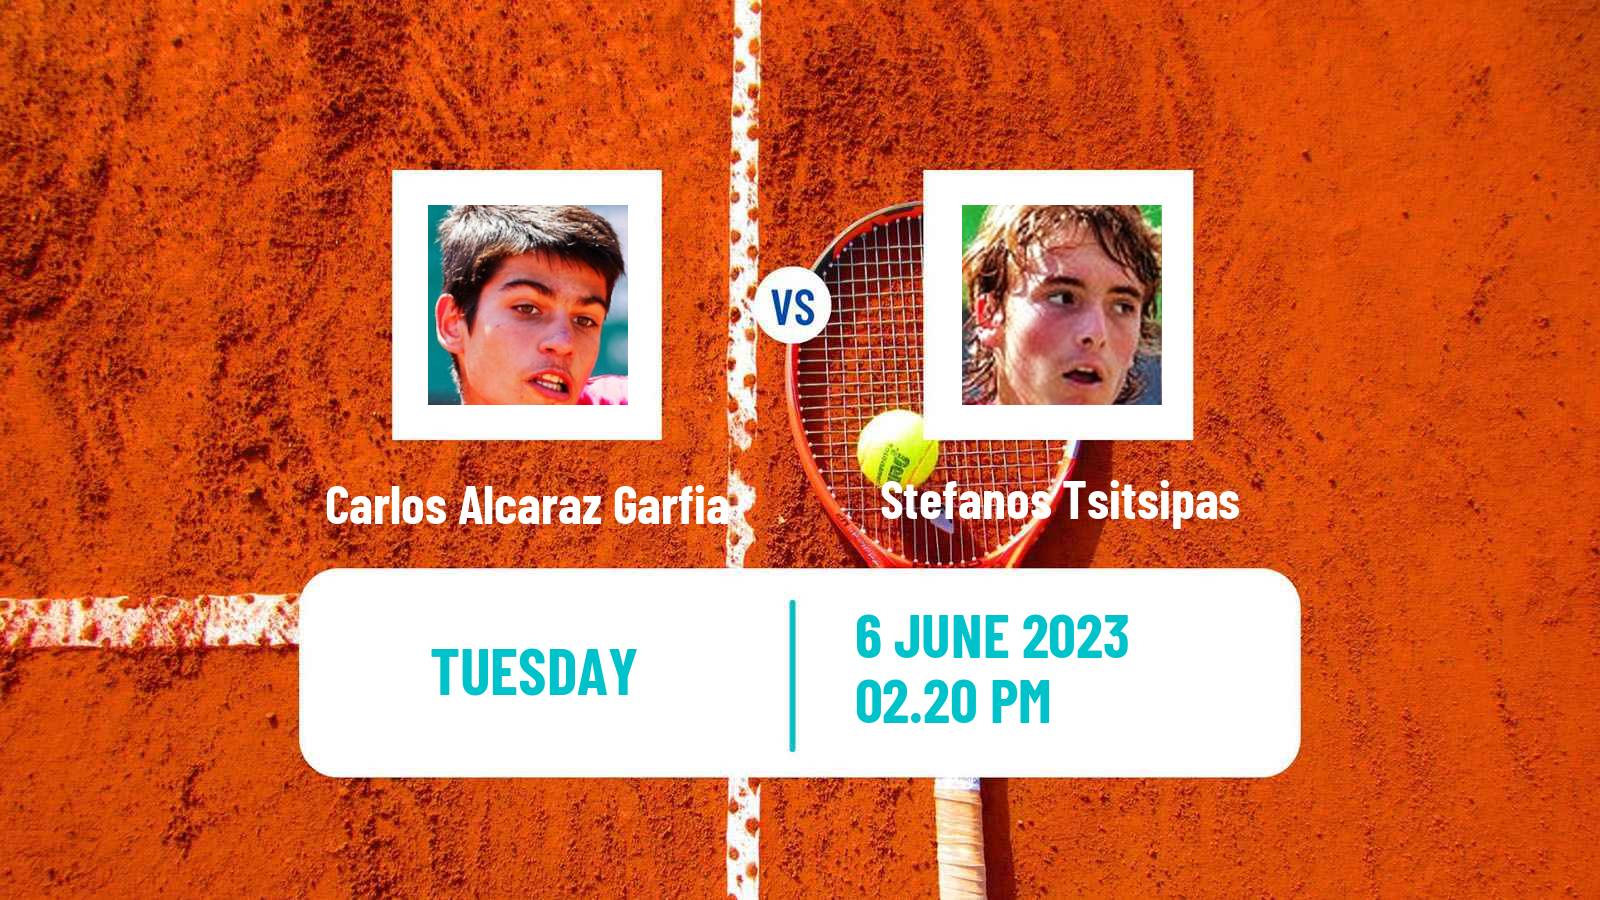 Tennis ATP Roland Garros Carlos Alcaraz Garfia - Stefanos Tsitsipas